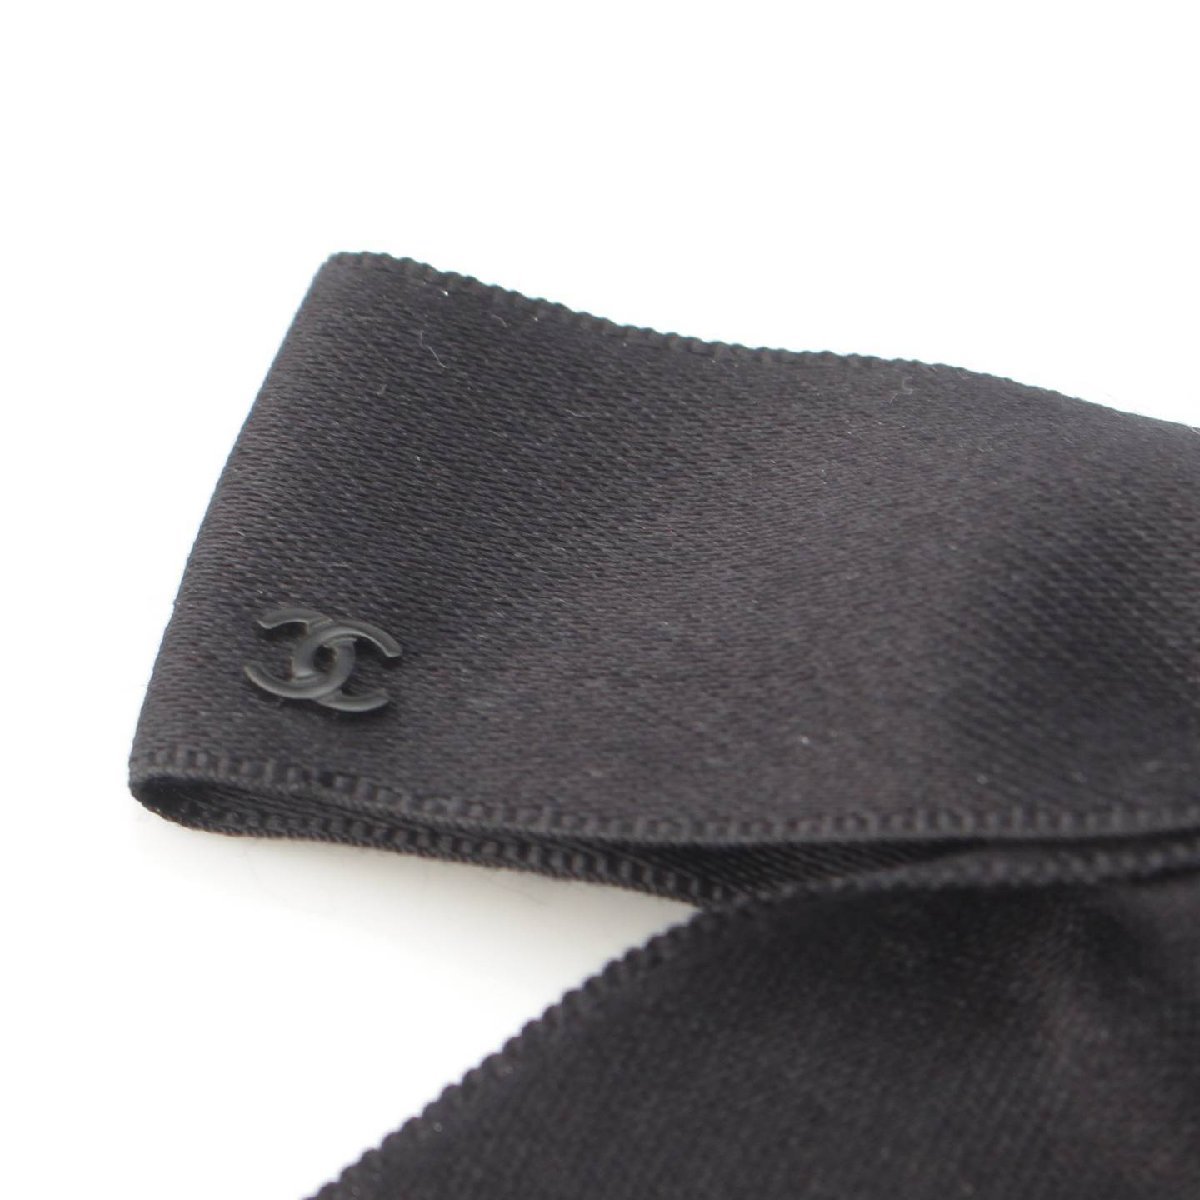 [ Chanel ]Chanel здесь Mark шелк лента заколка аксессуары для волос черный [ б/у ][ стандартный товар гарантия ]194151